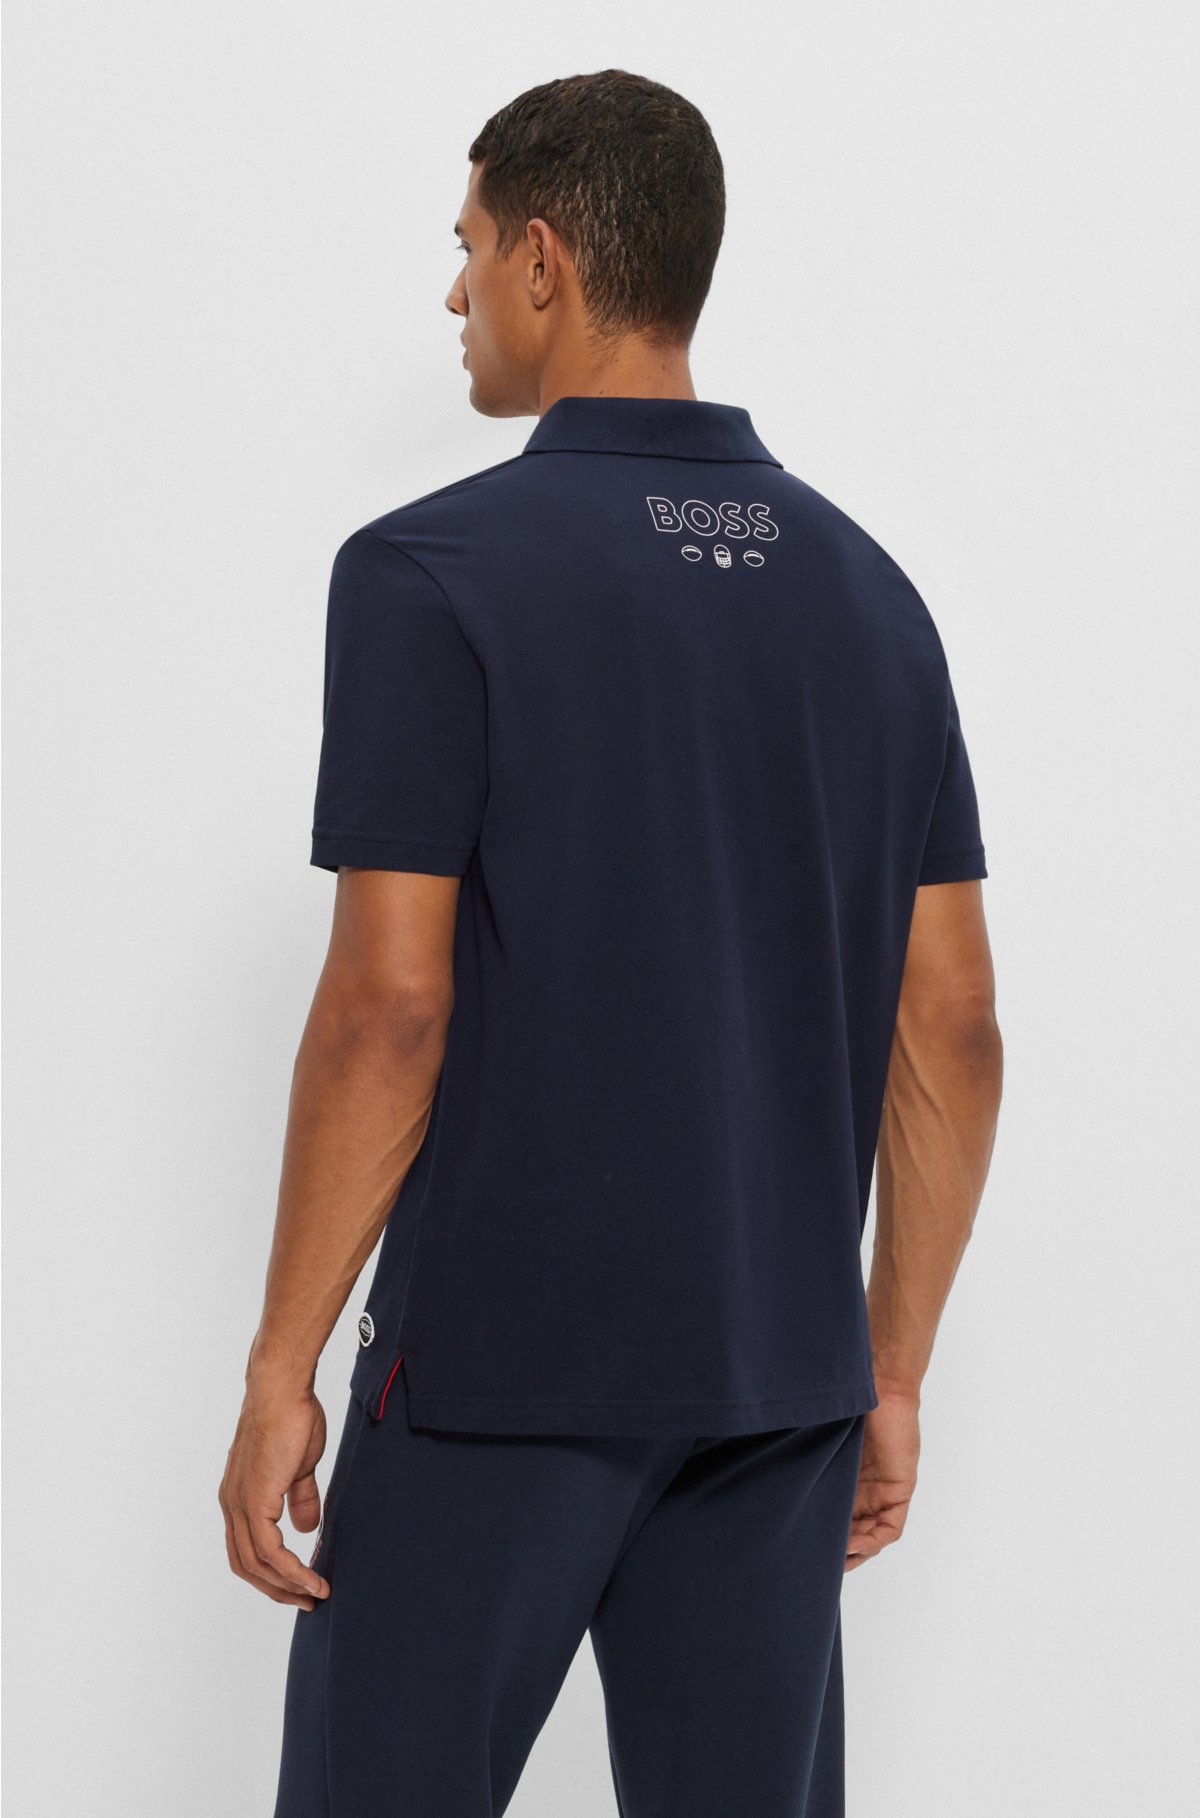 BOSS x NFL cotton-piqué polo shirt with collaborative branding, Patriots